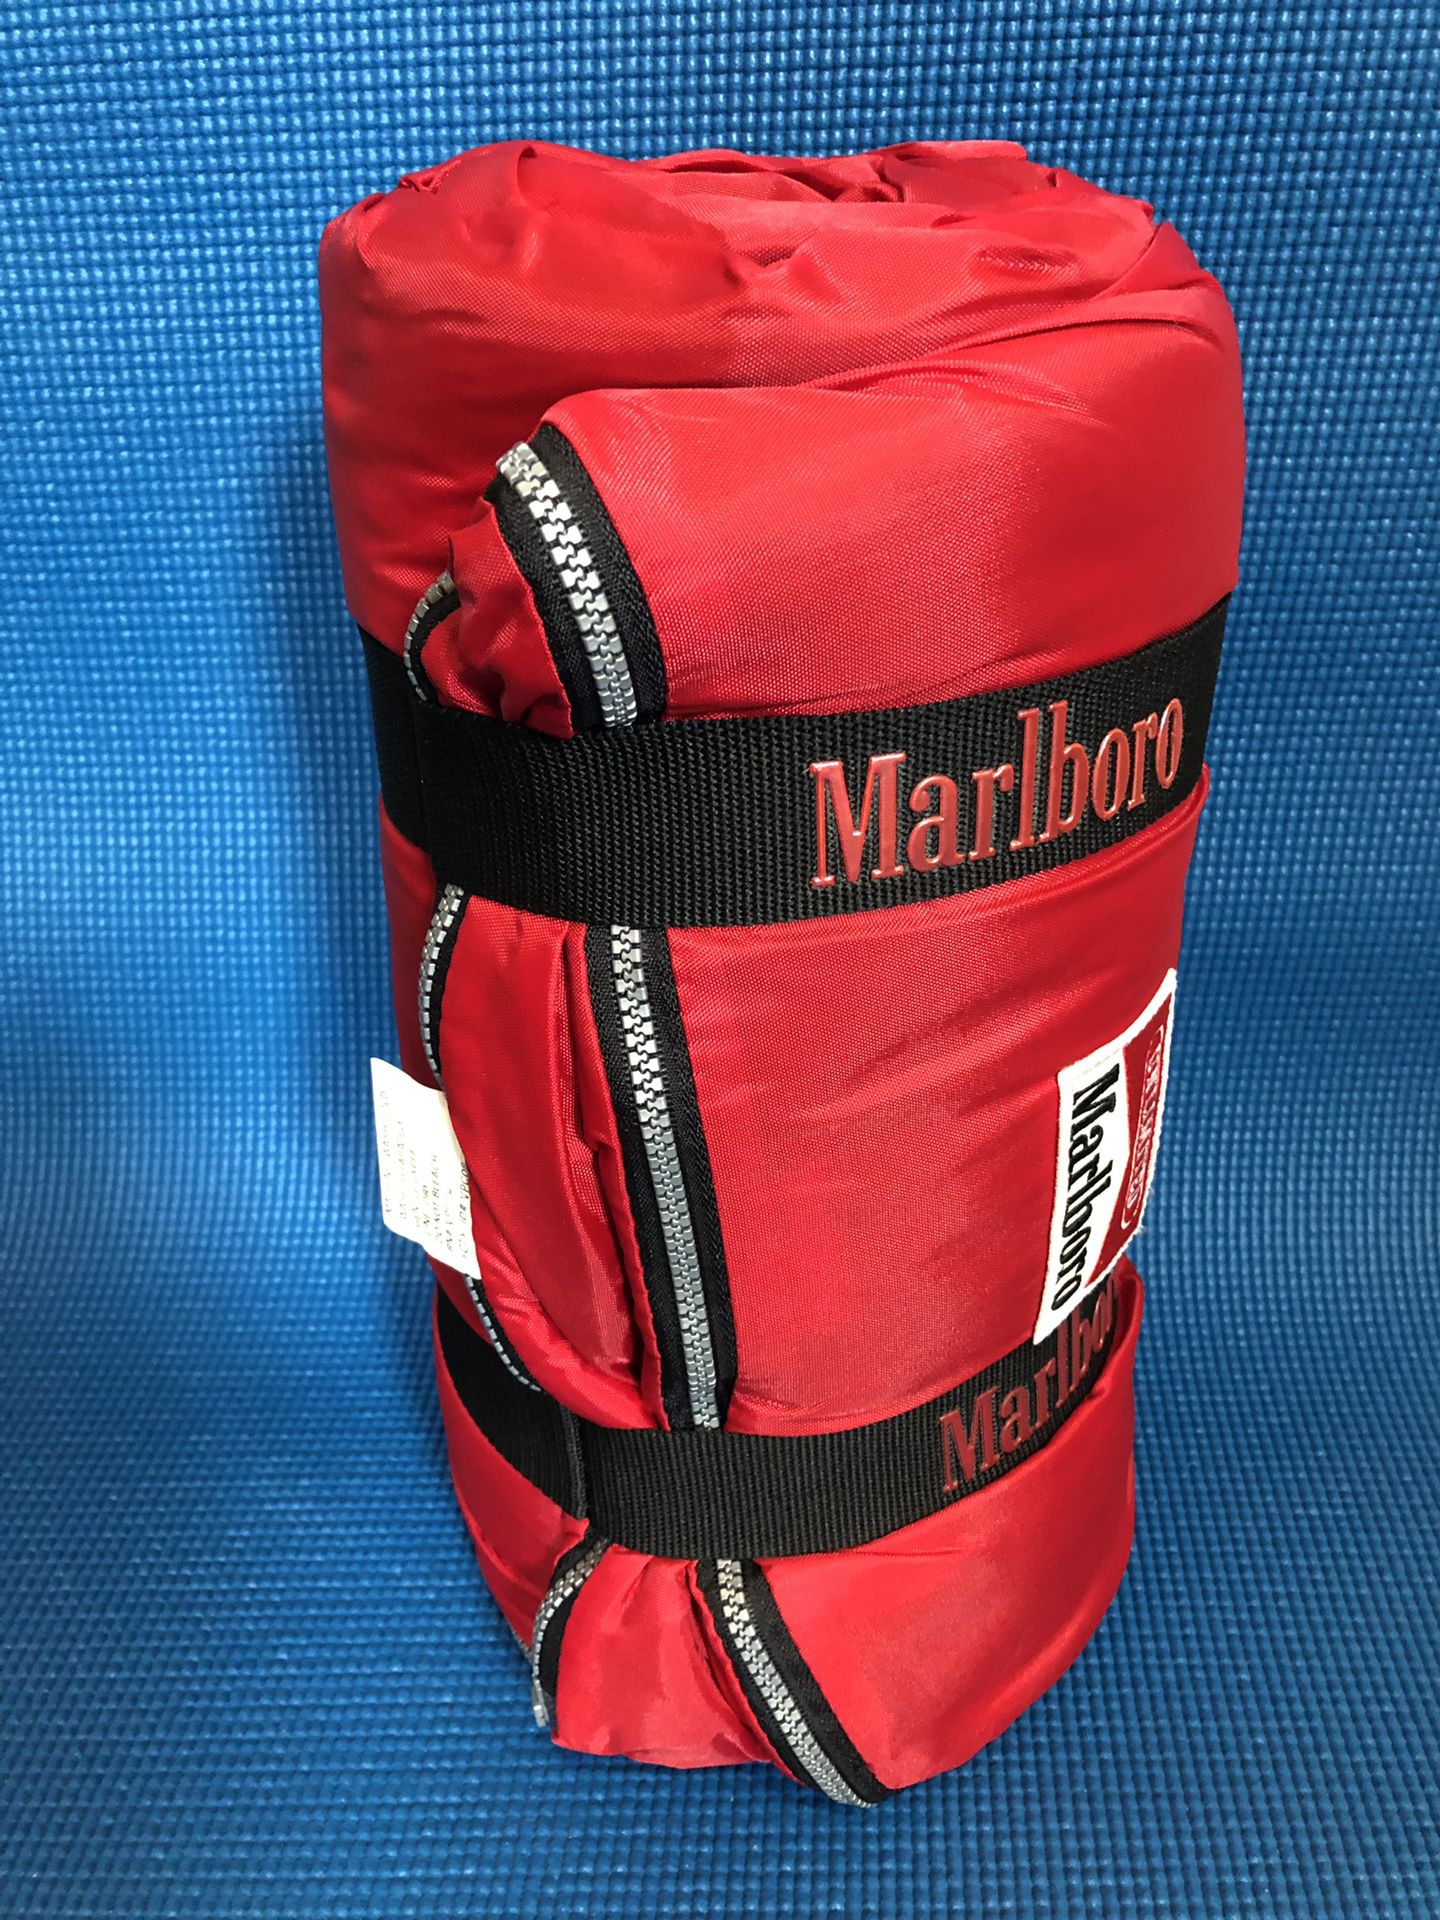 Marlboro Unlimited Red Sleeping Bag NEW